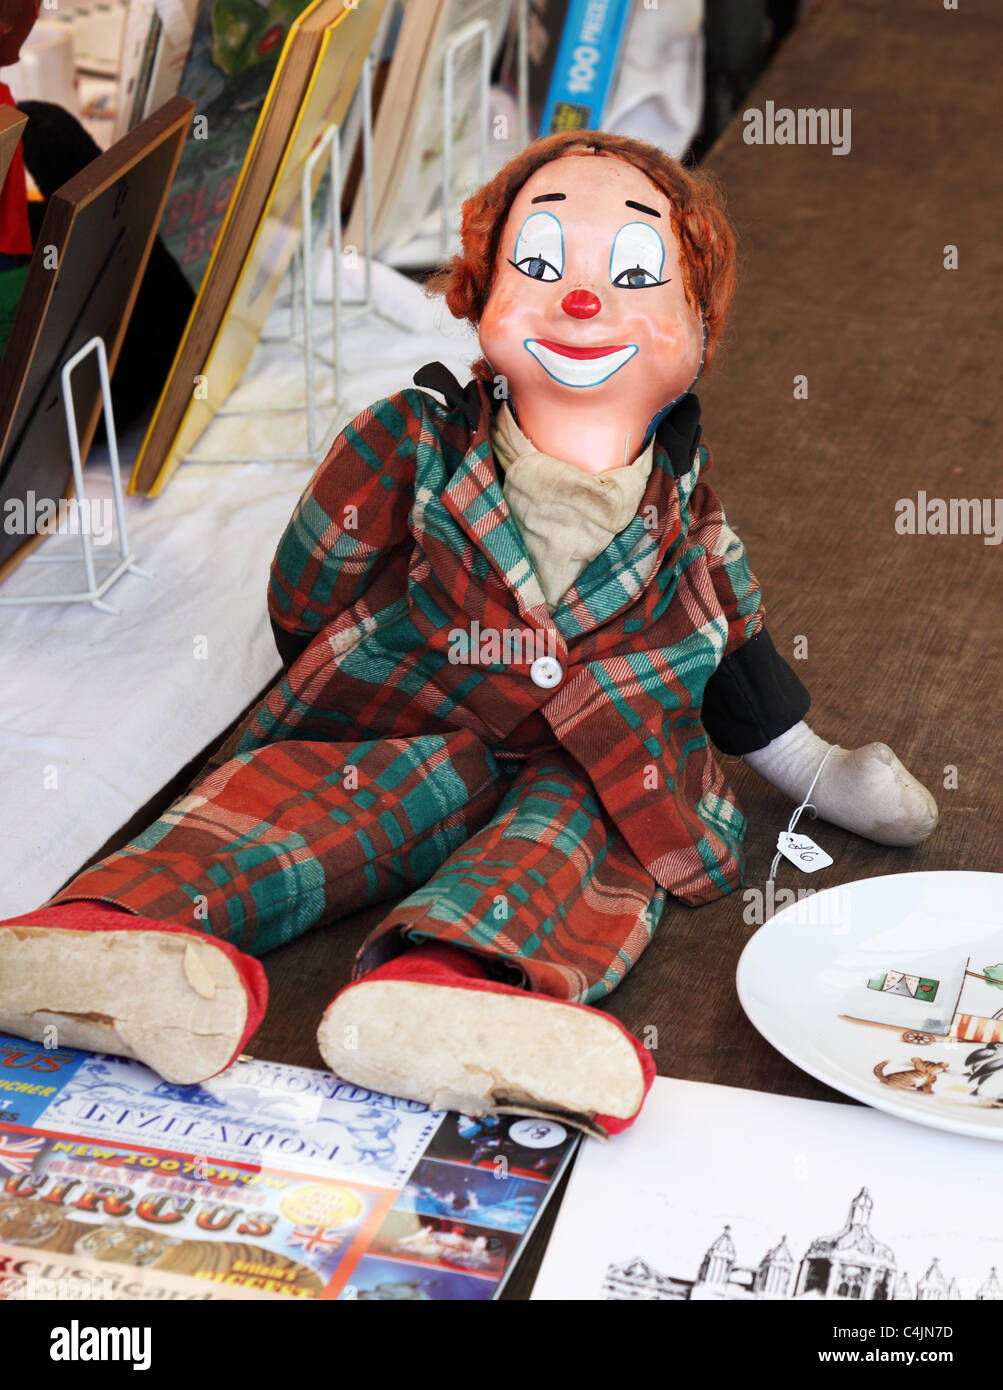 Clown doll on market stall Stock Photo